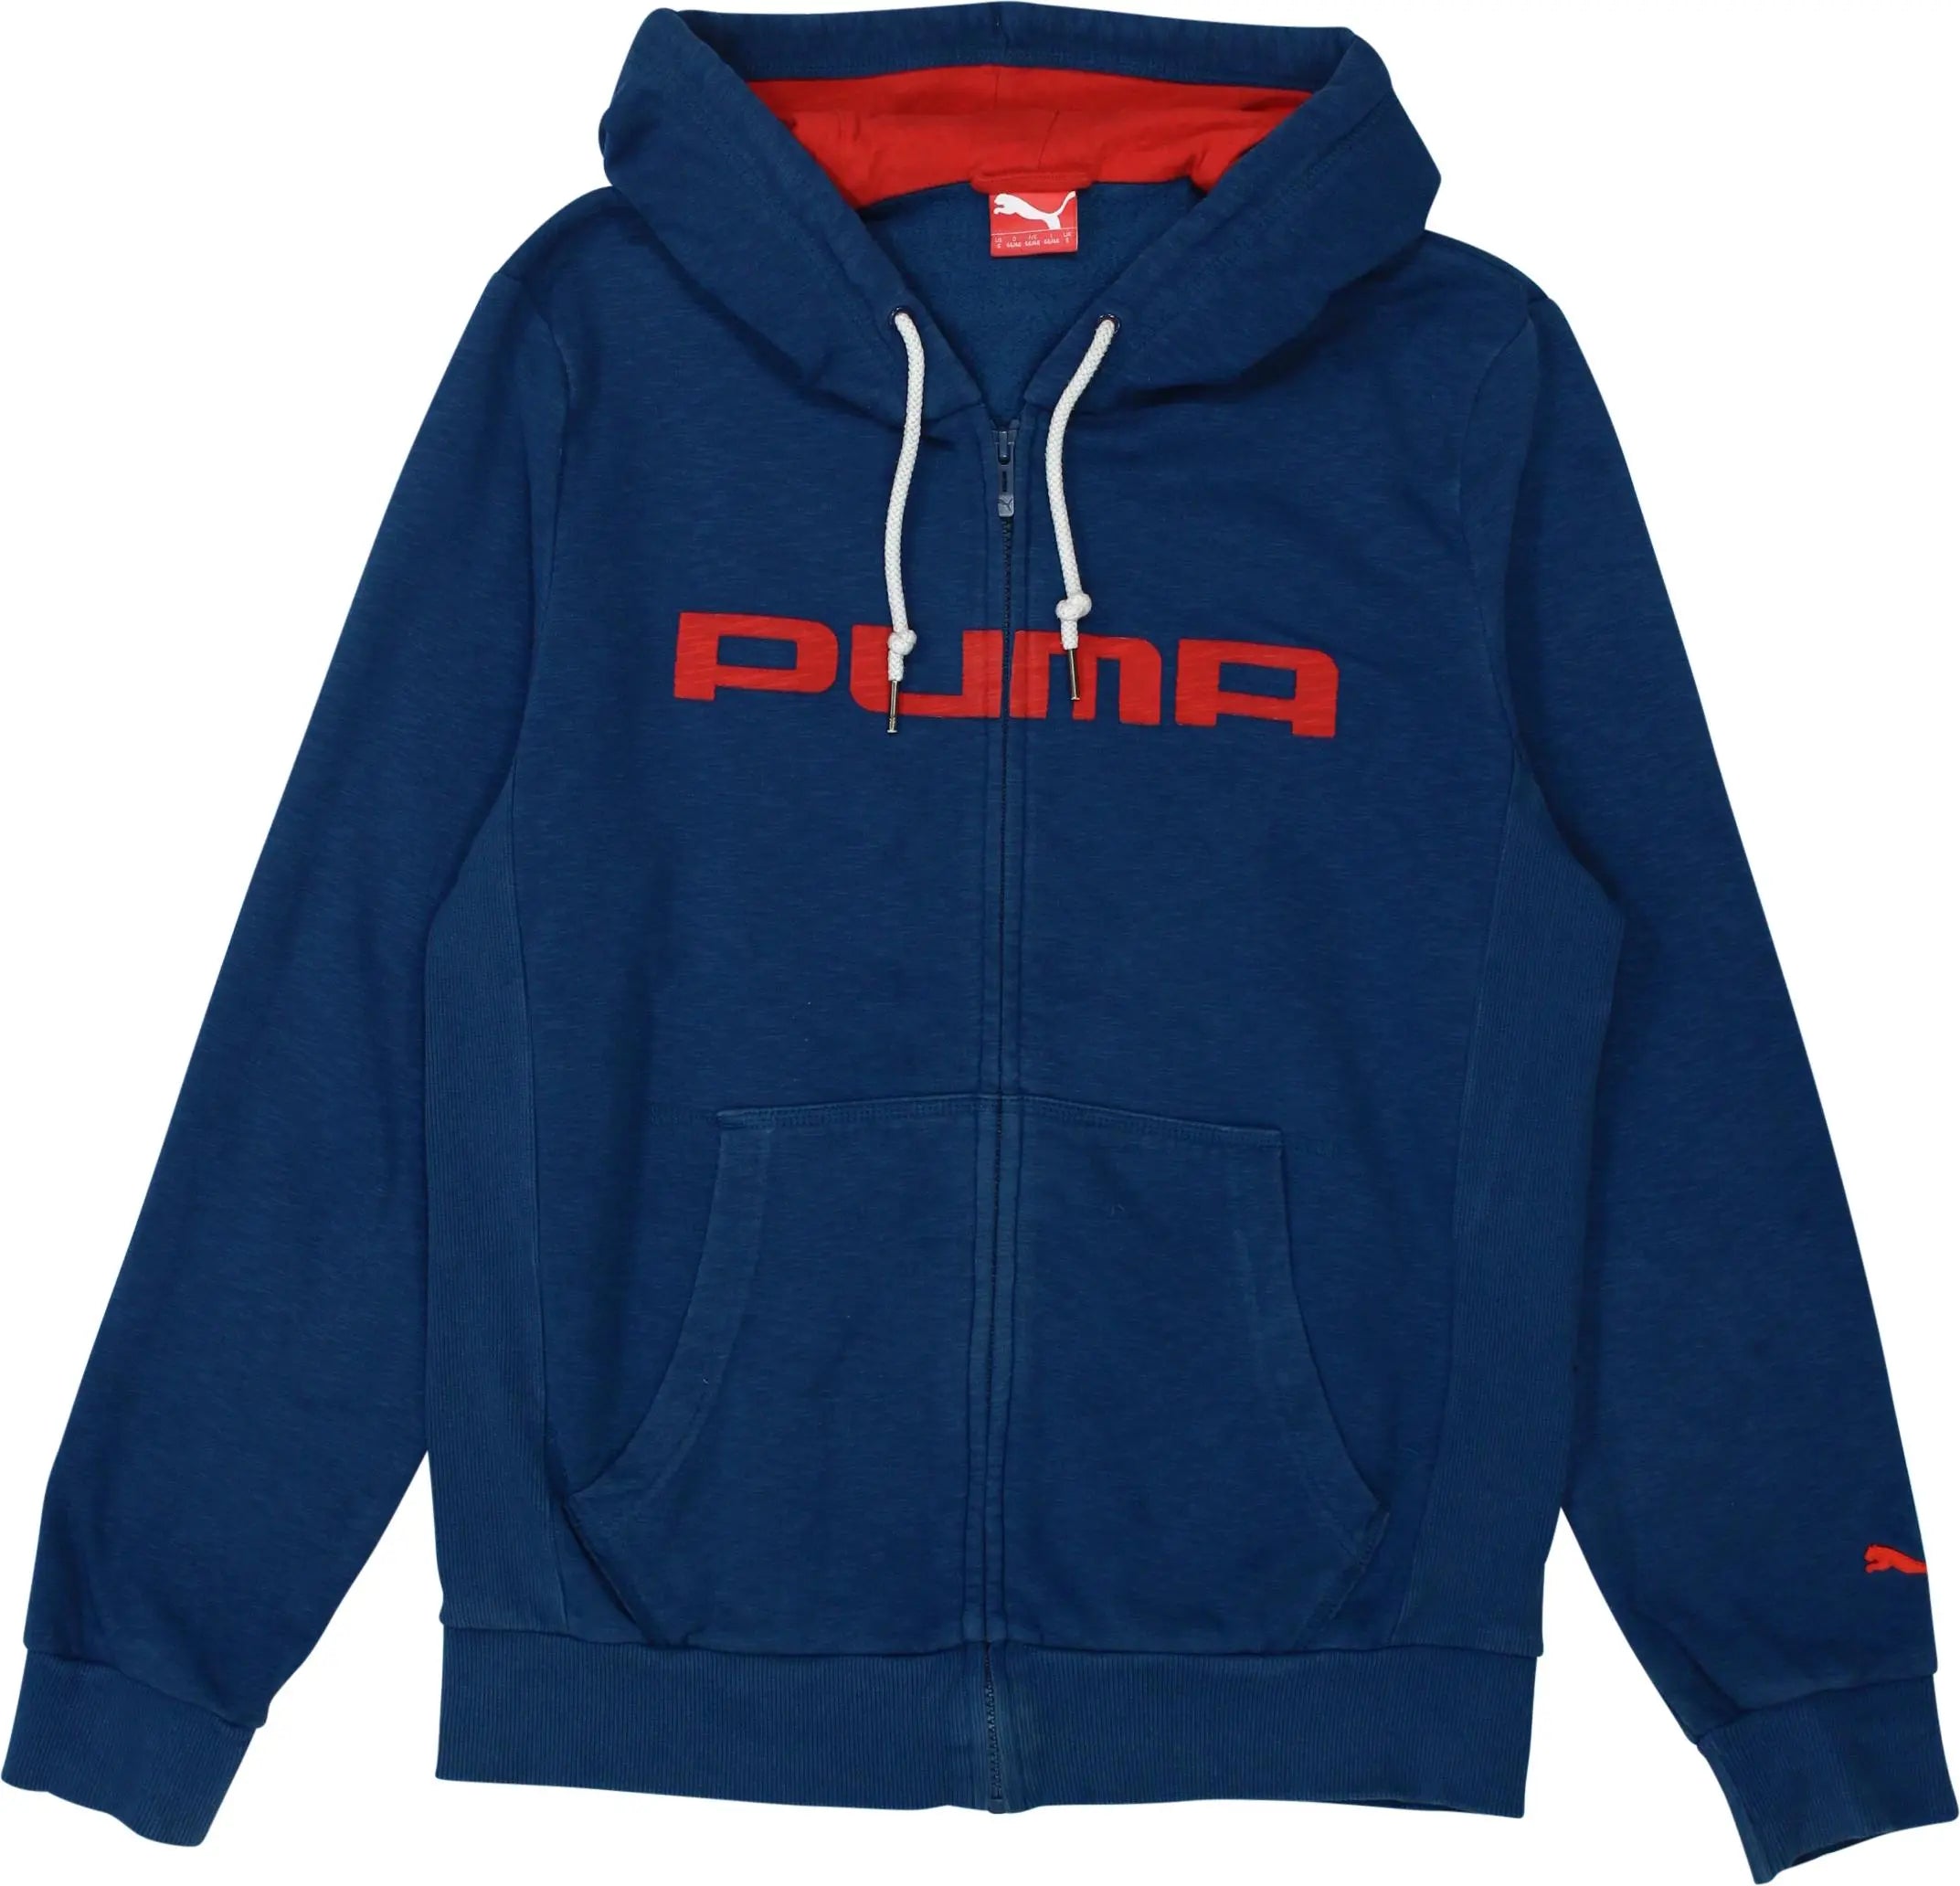 Puma - Puma Hoodie- ThriftTale.com - Vintage and second handclothing